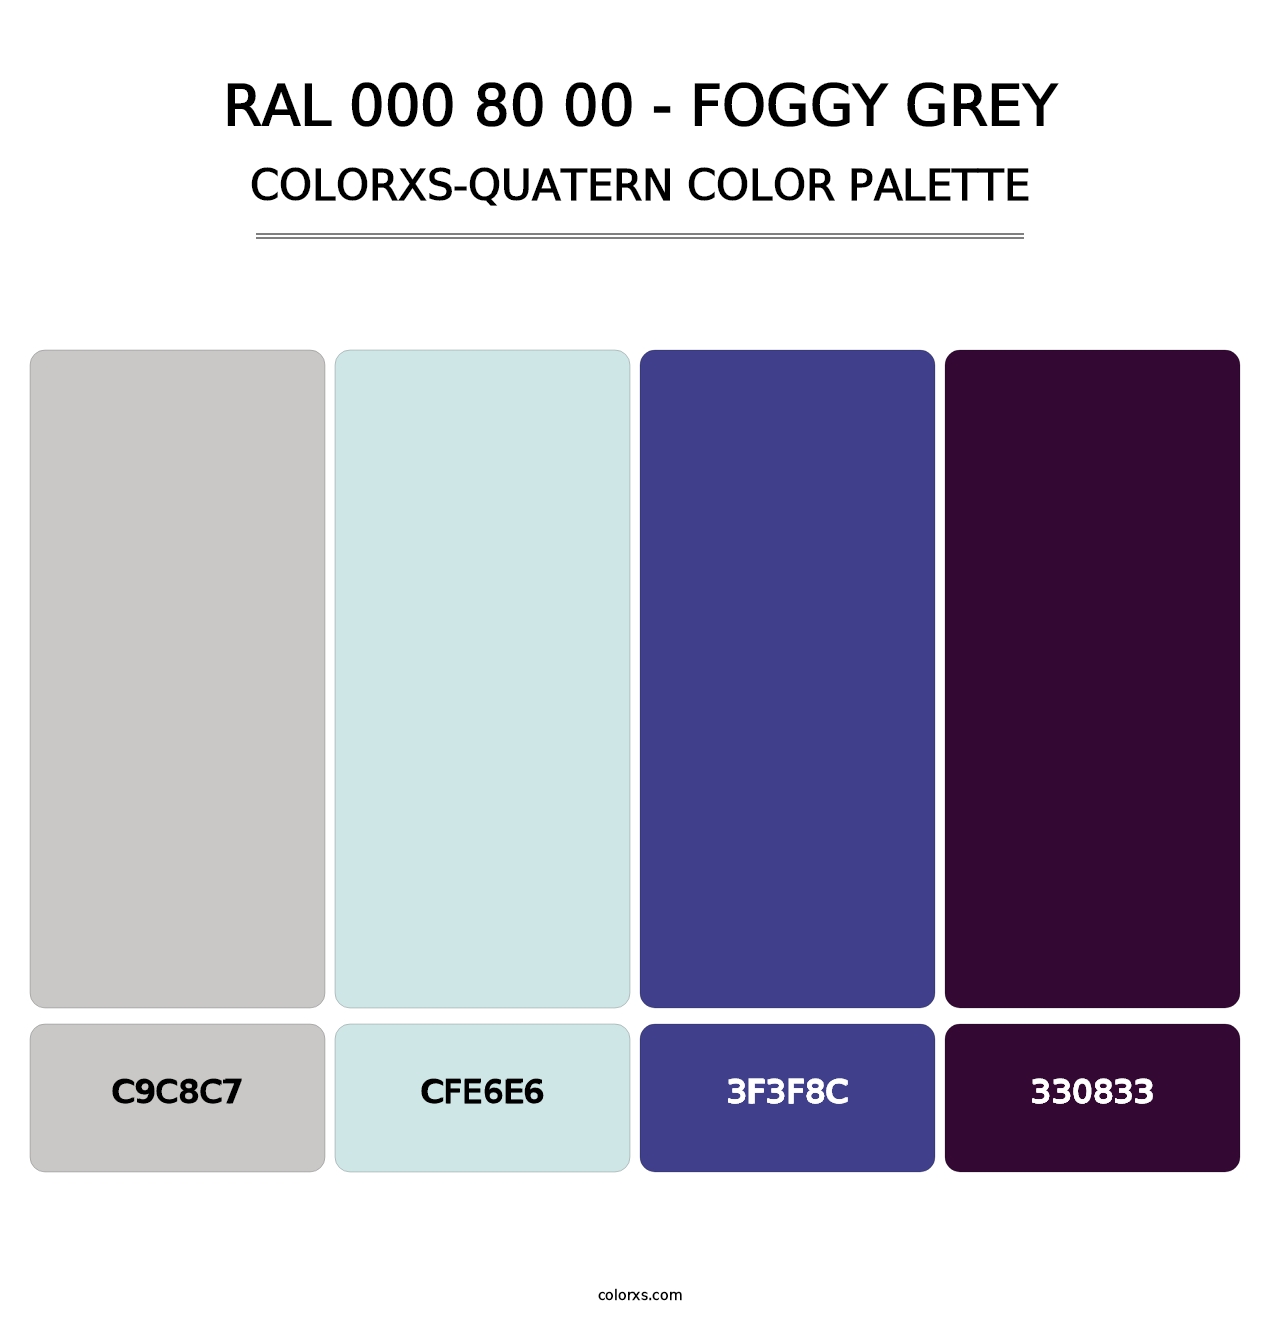 RAL 000 80 00 - Foggy Grey - Colorxs Quatern Palette